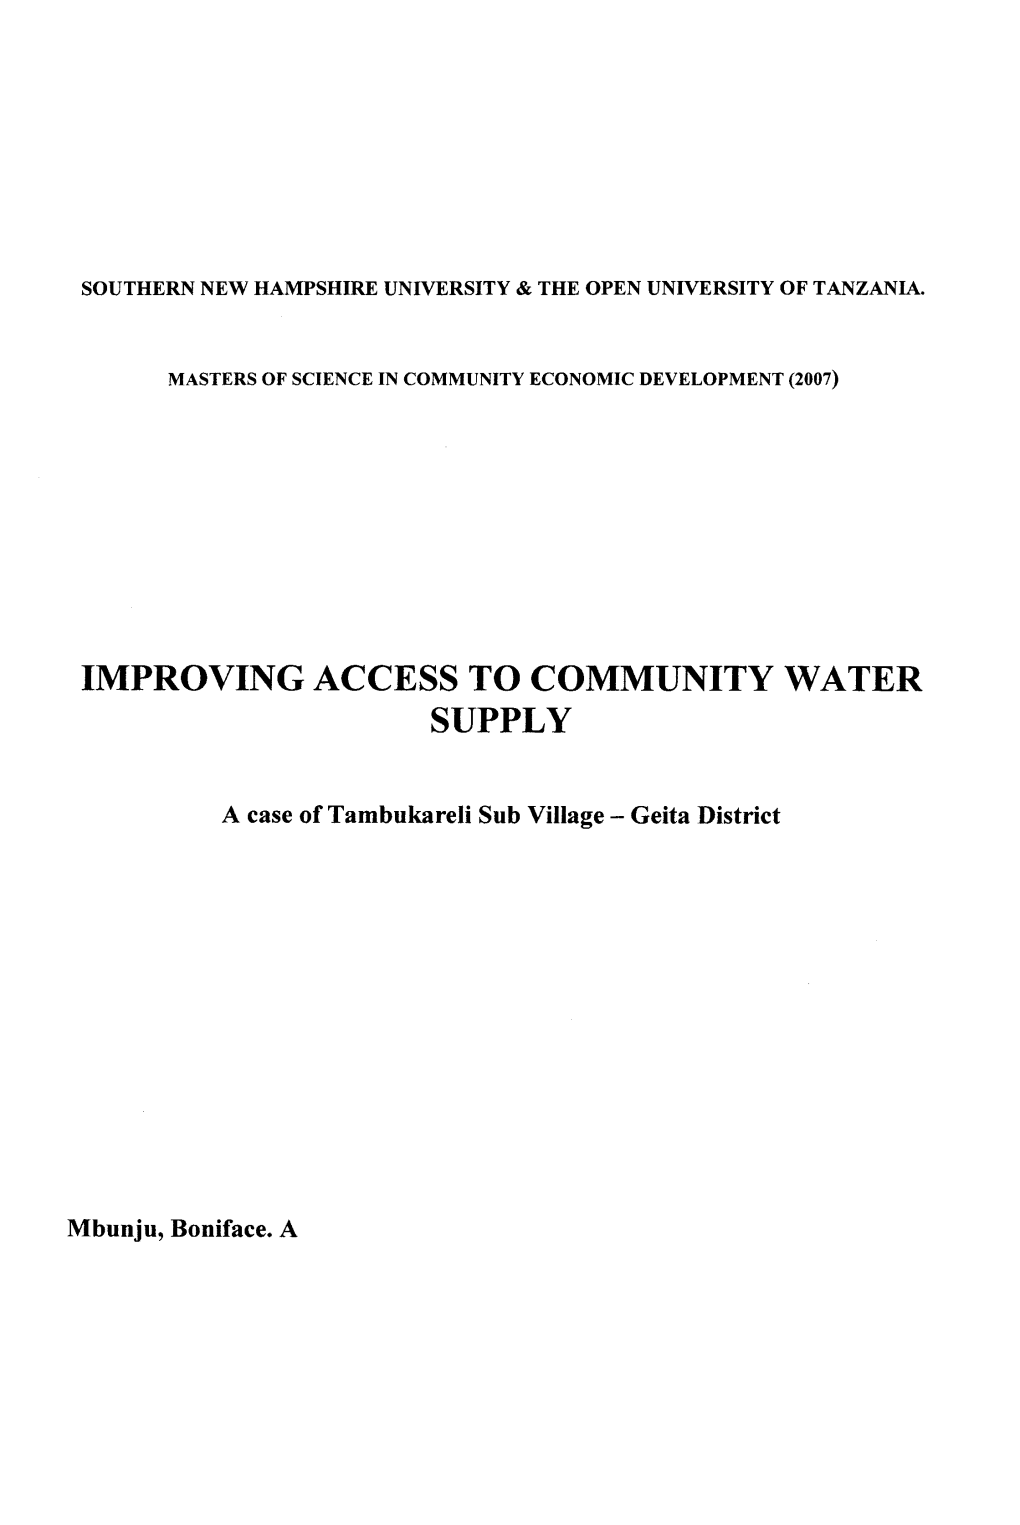 Improving Access to Community Water Supply : a Case of Tambukareli Sub